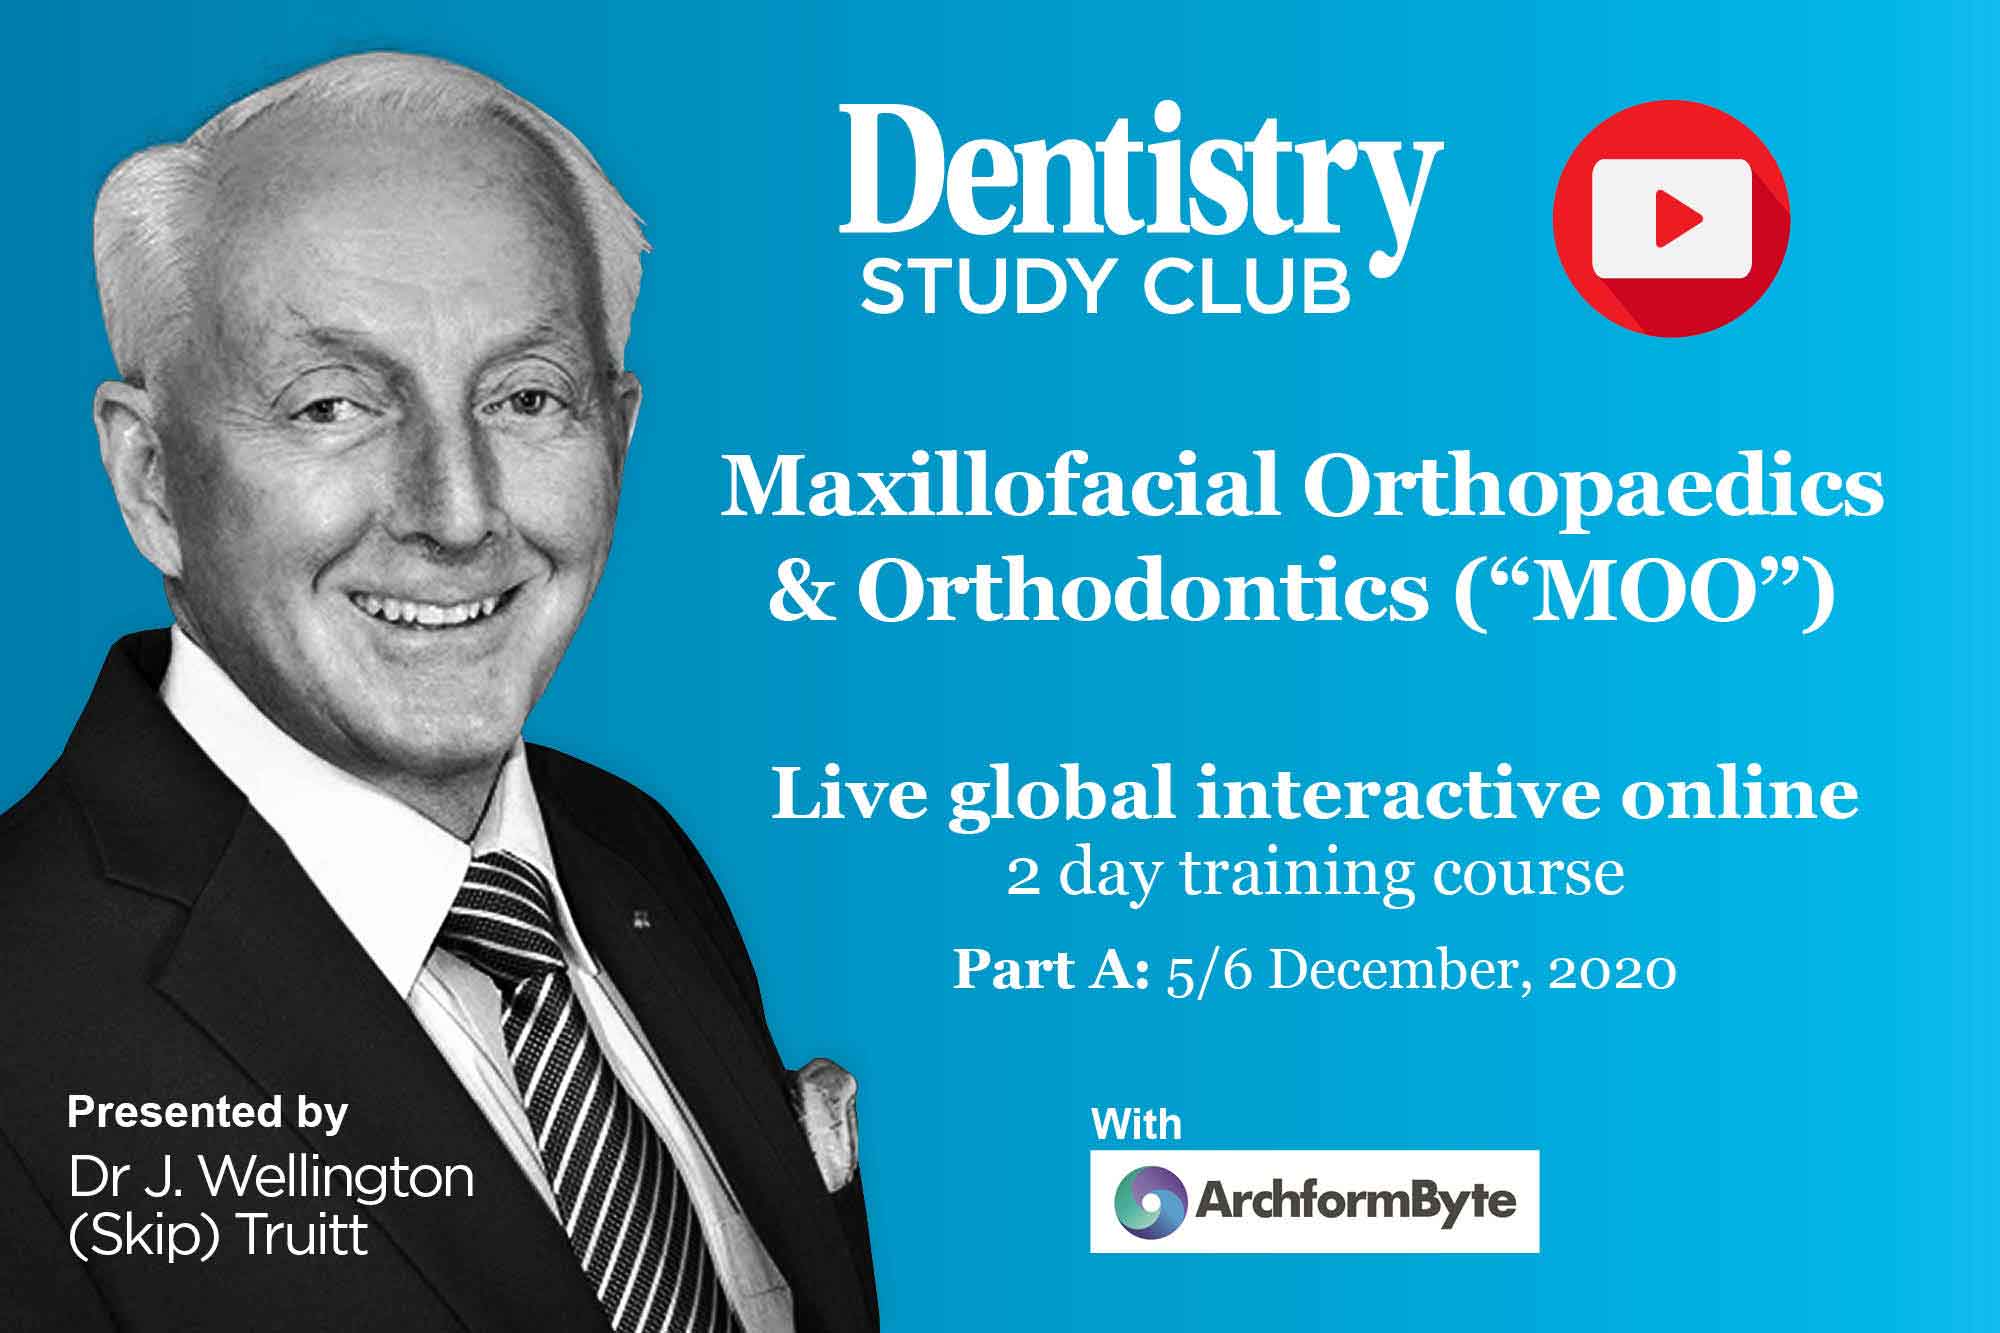 Maxillofacial orthopaedics and orthodontics